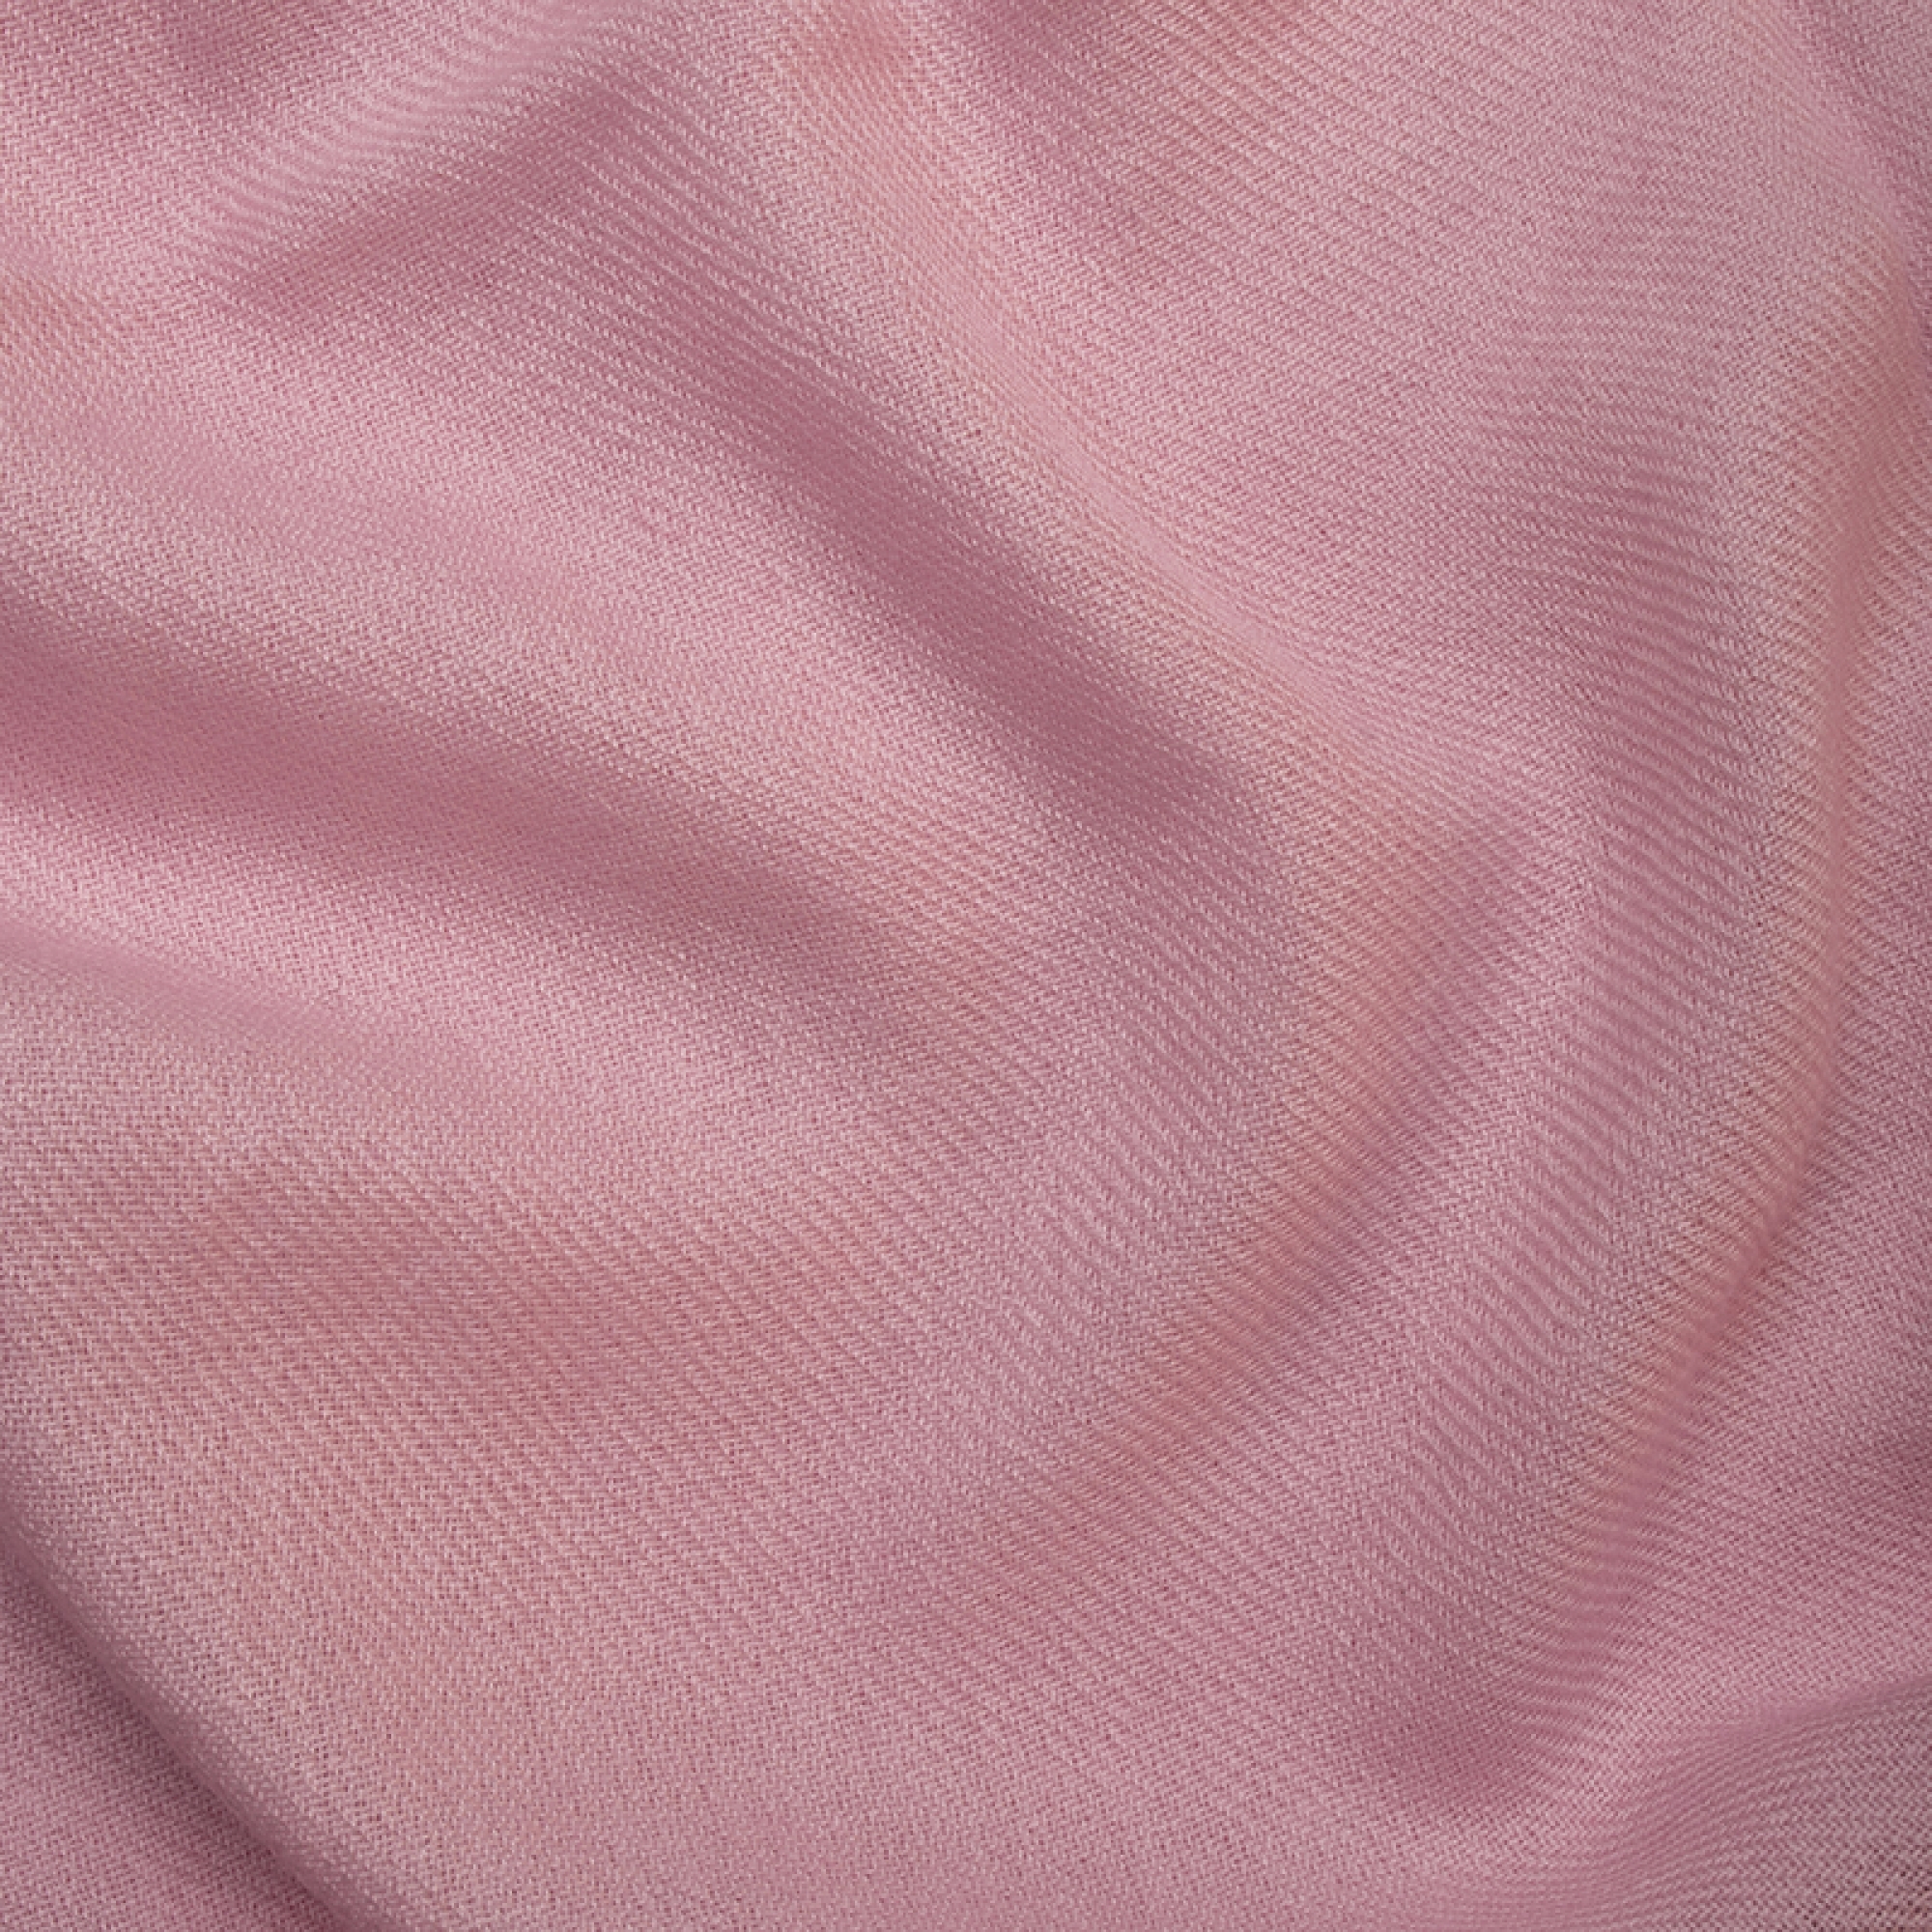 Cashmere accessori plaid toodoo plain l 220 x 220 rosa pallido 220x220cm